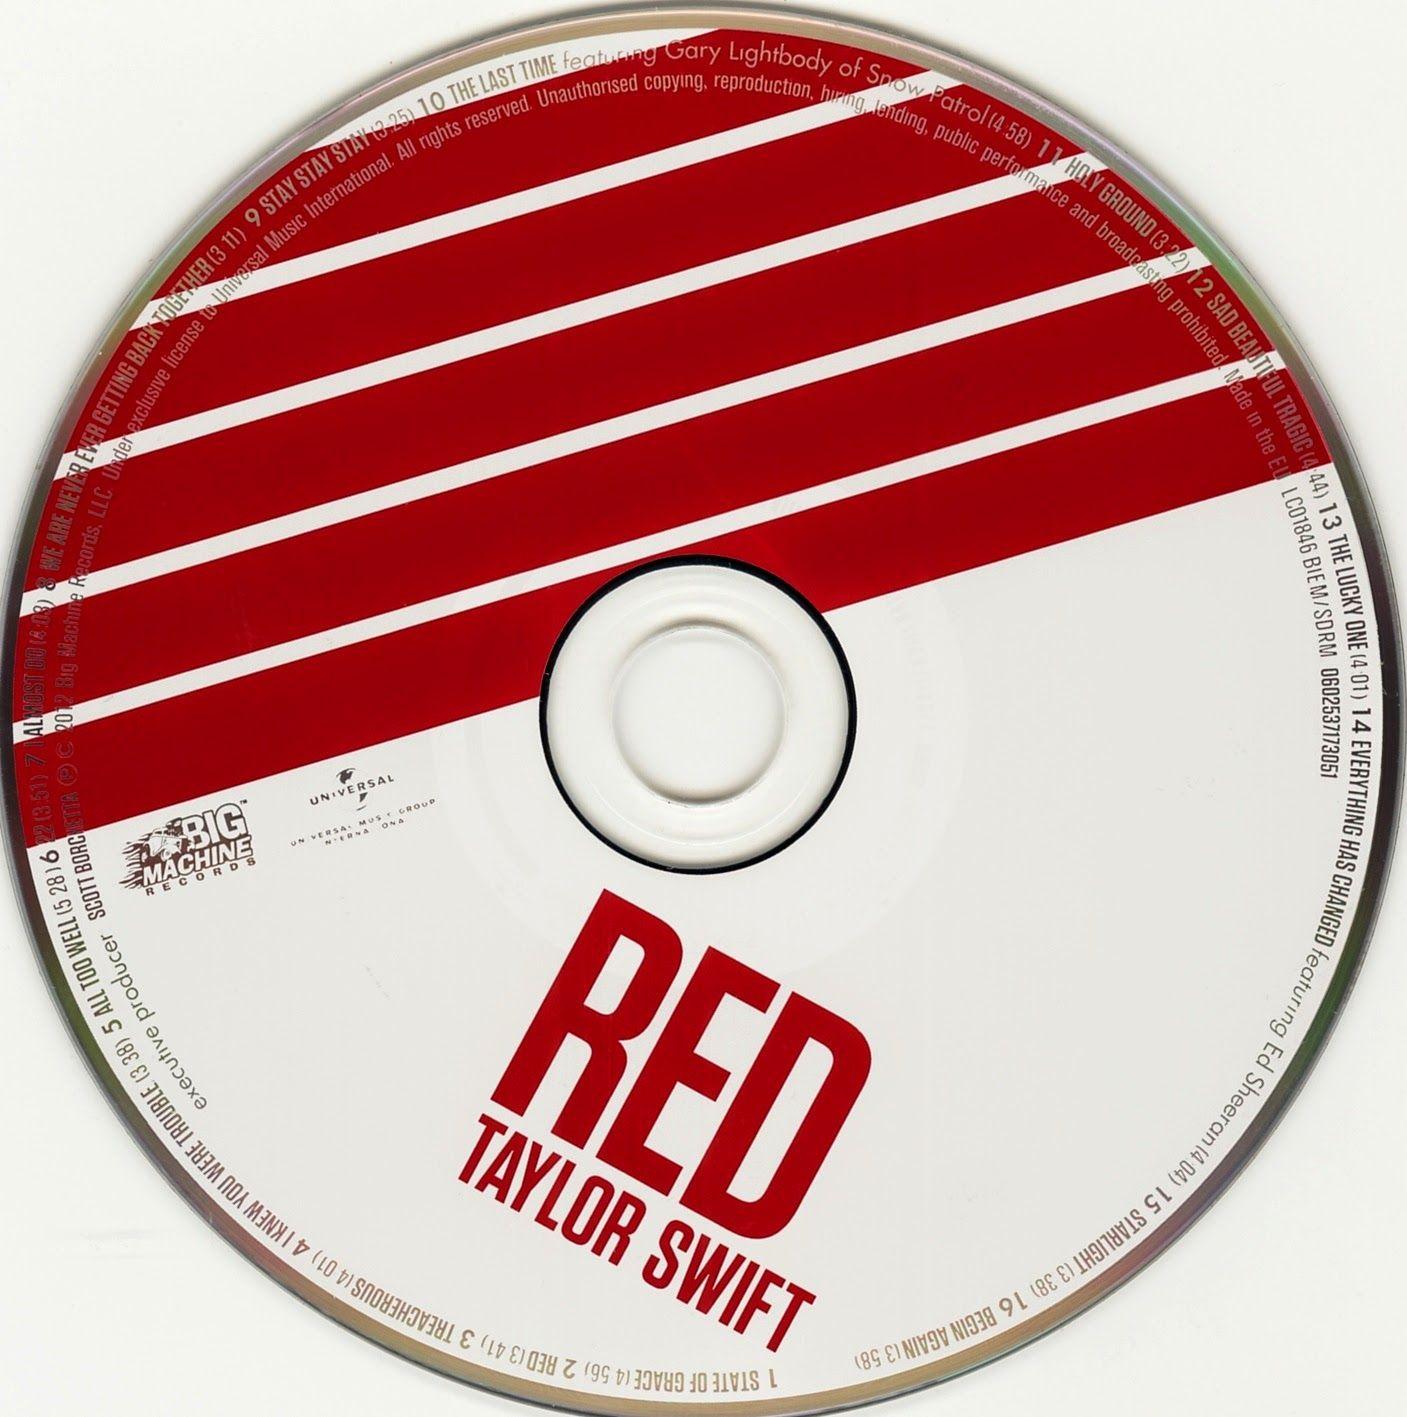 Red Taylor Swift Logo - Digipak Research - Taylor Swift 'Red' | Joei's Music Video Blog